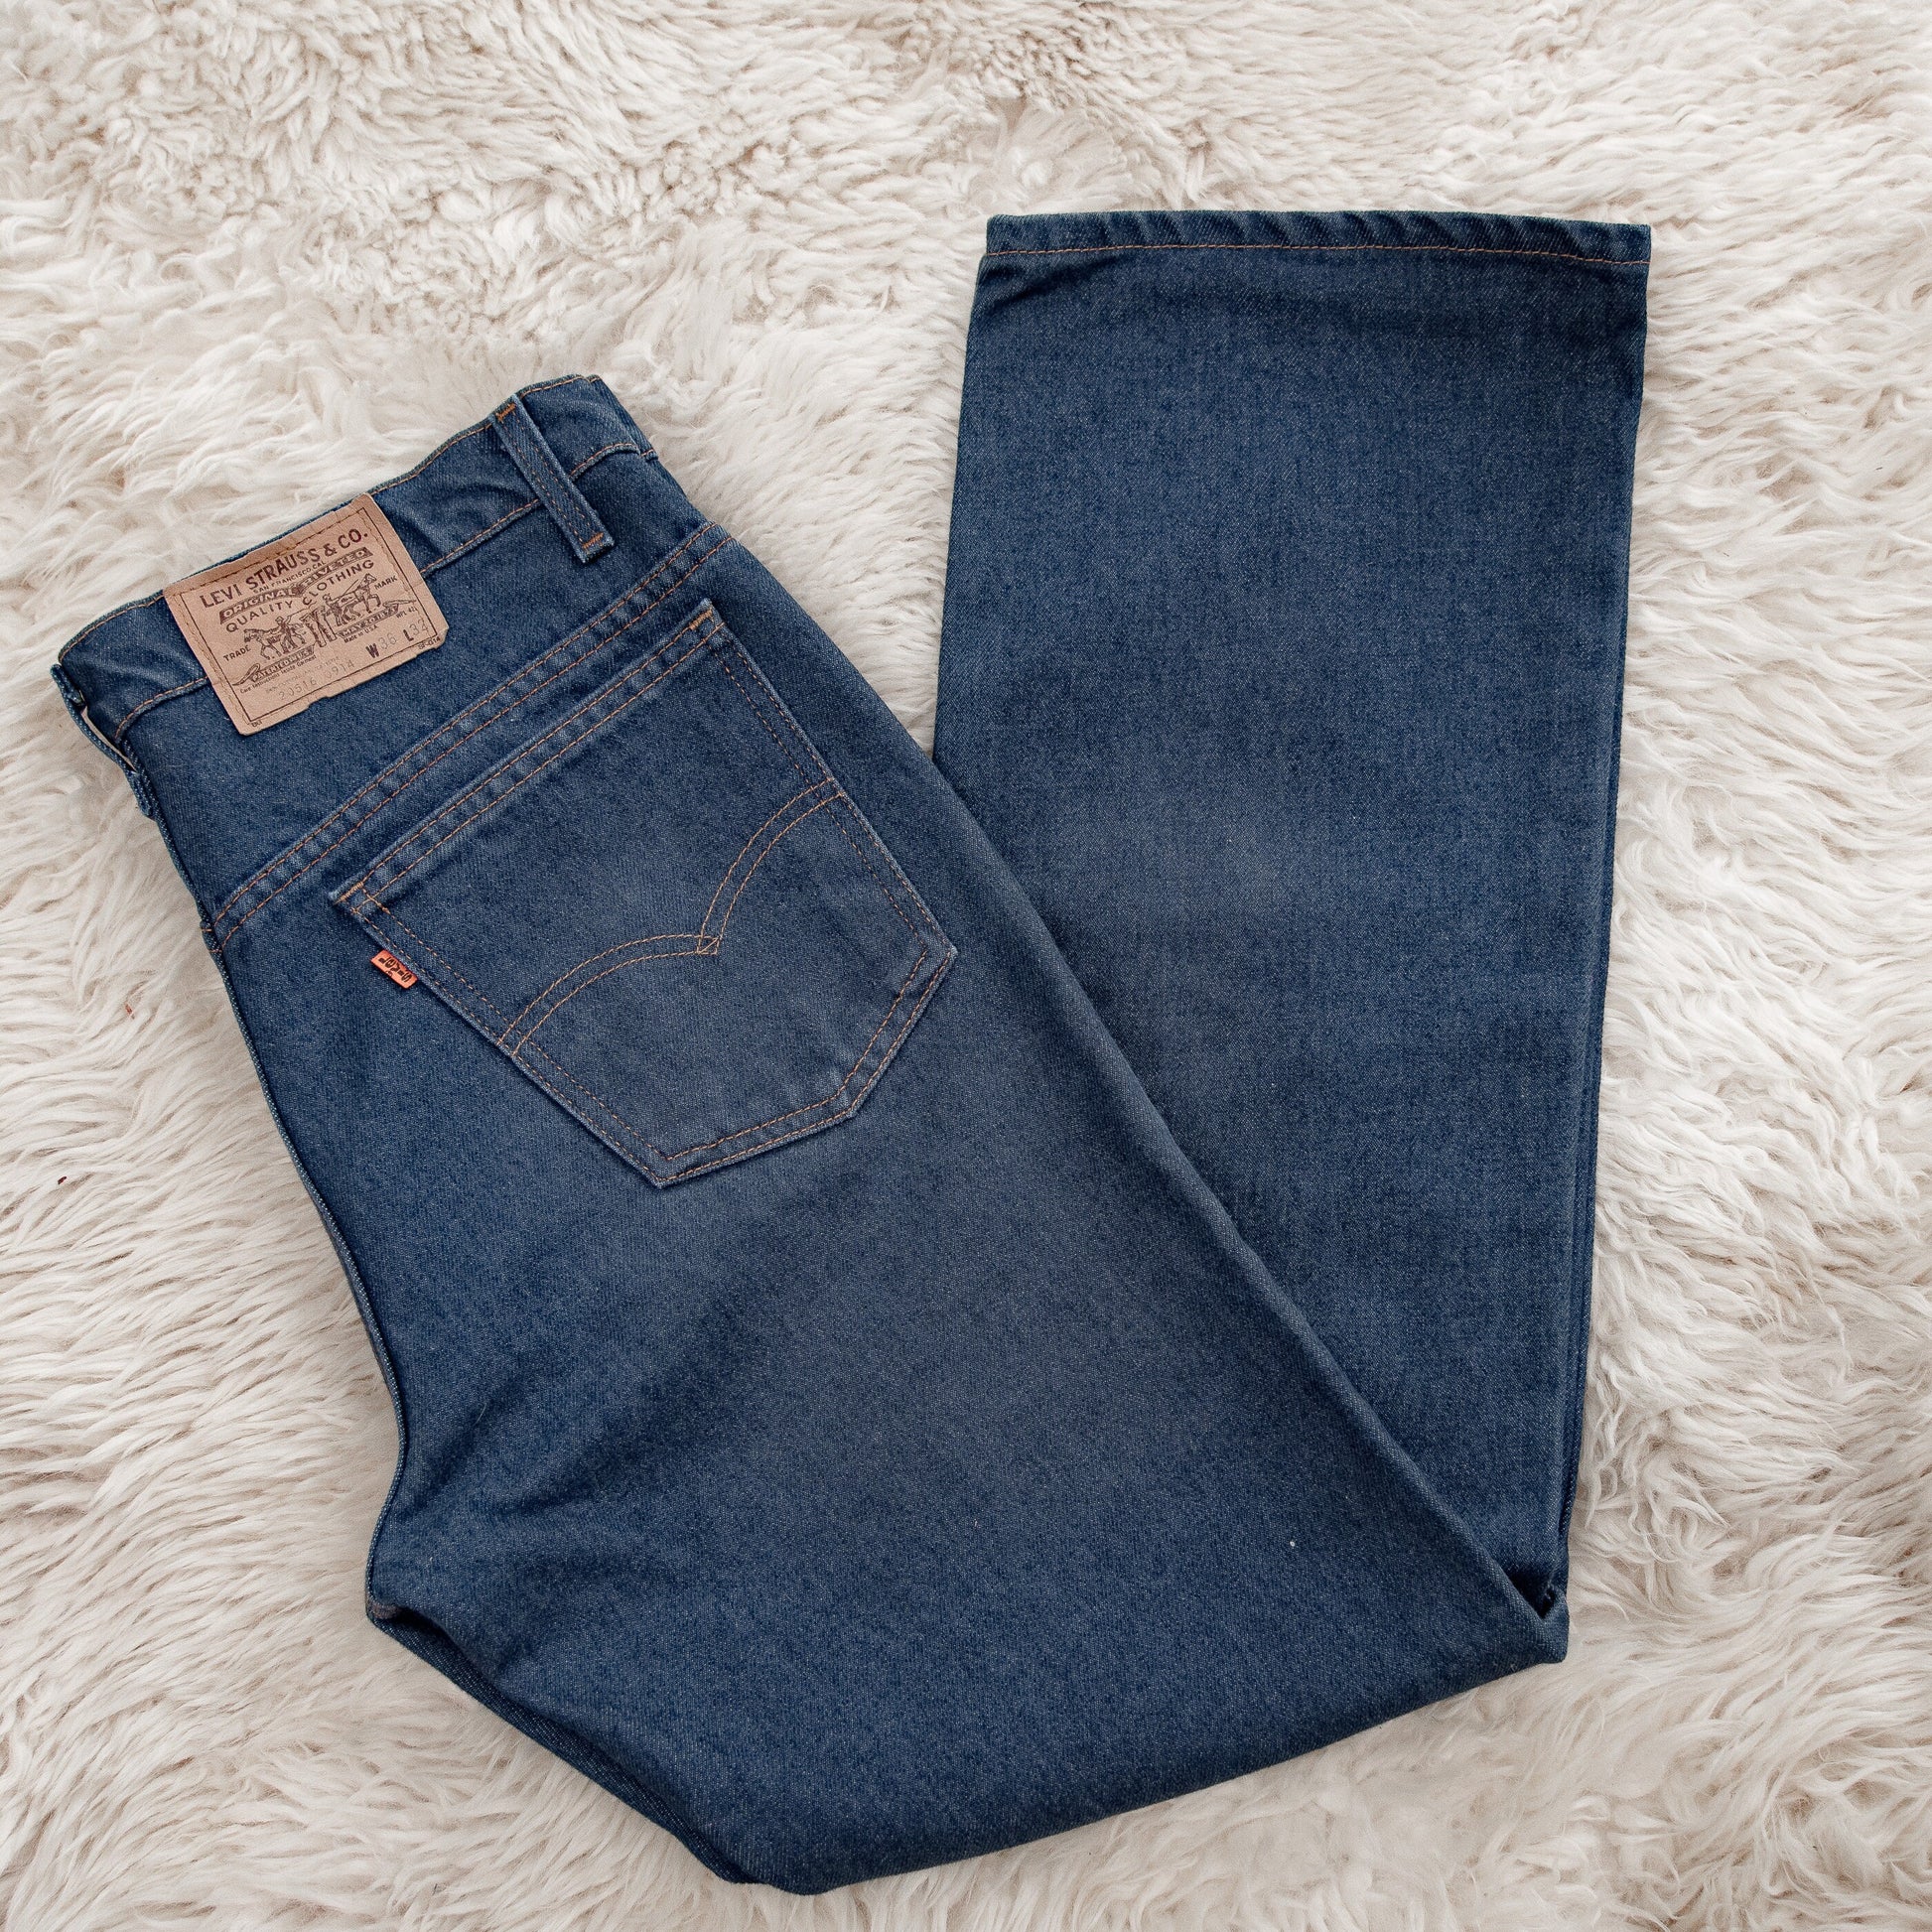 Vintage Levis jeans, 36 Waist Orange Tab 516 jeans, 70s high